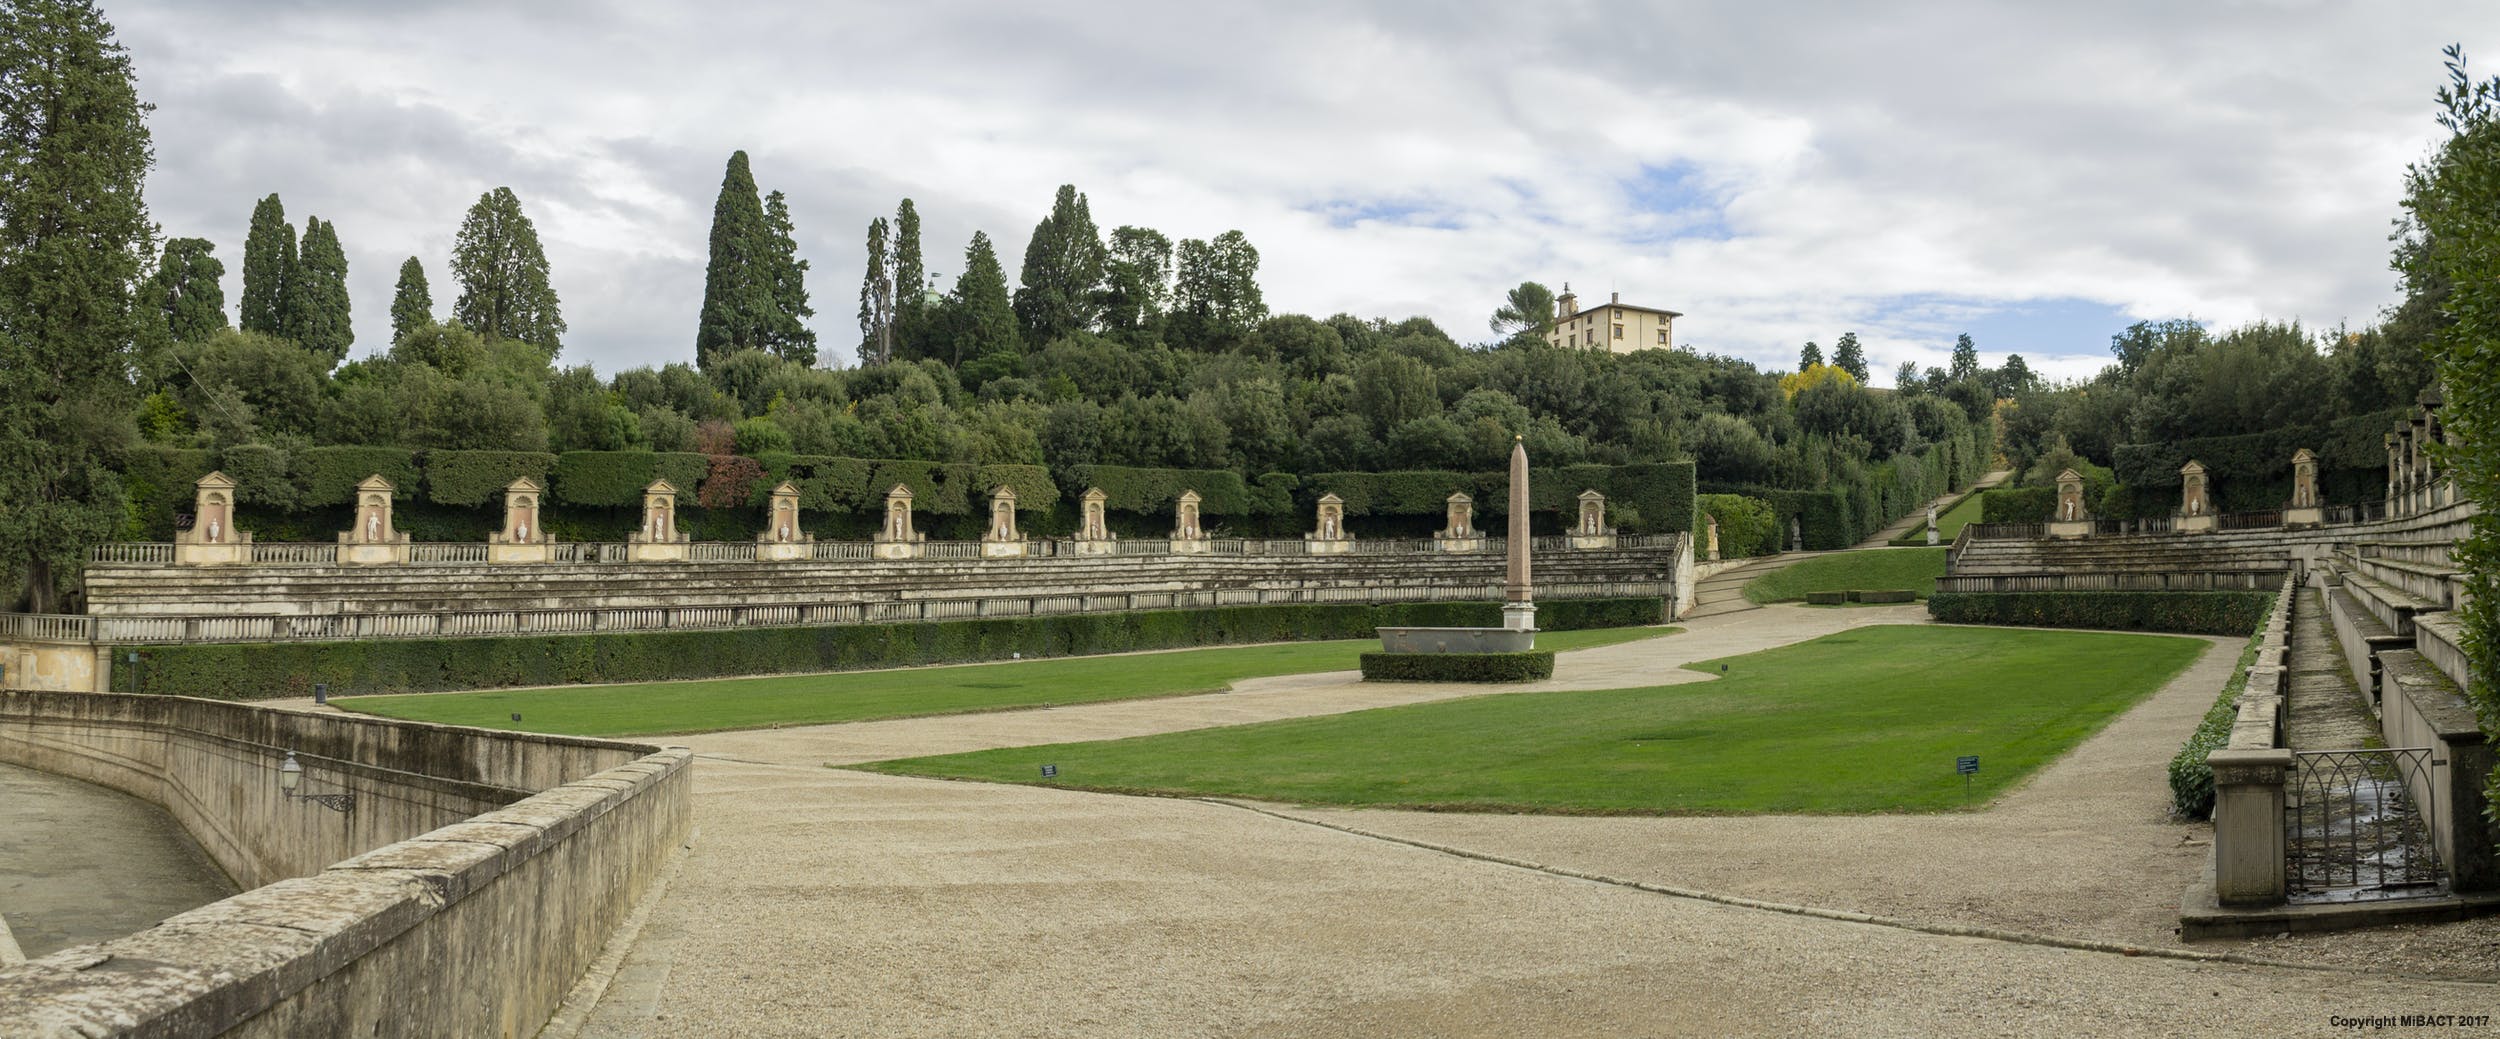 Amfiteatr ogrody Boboli